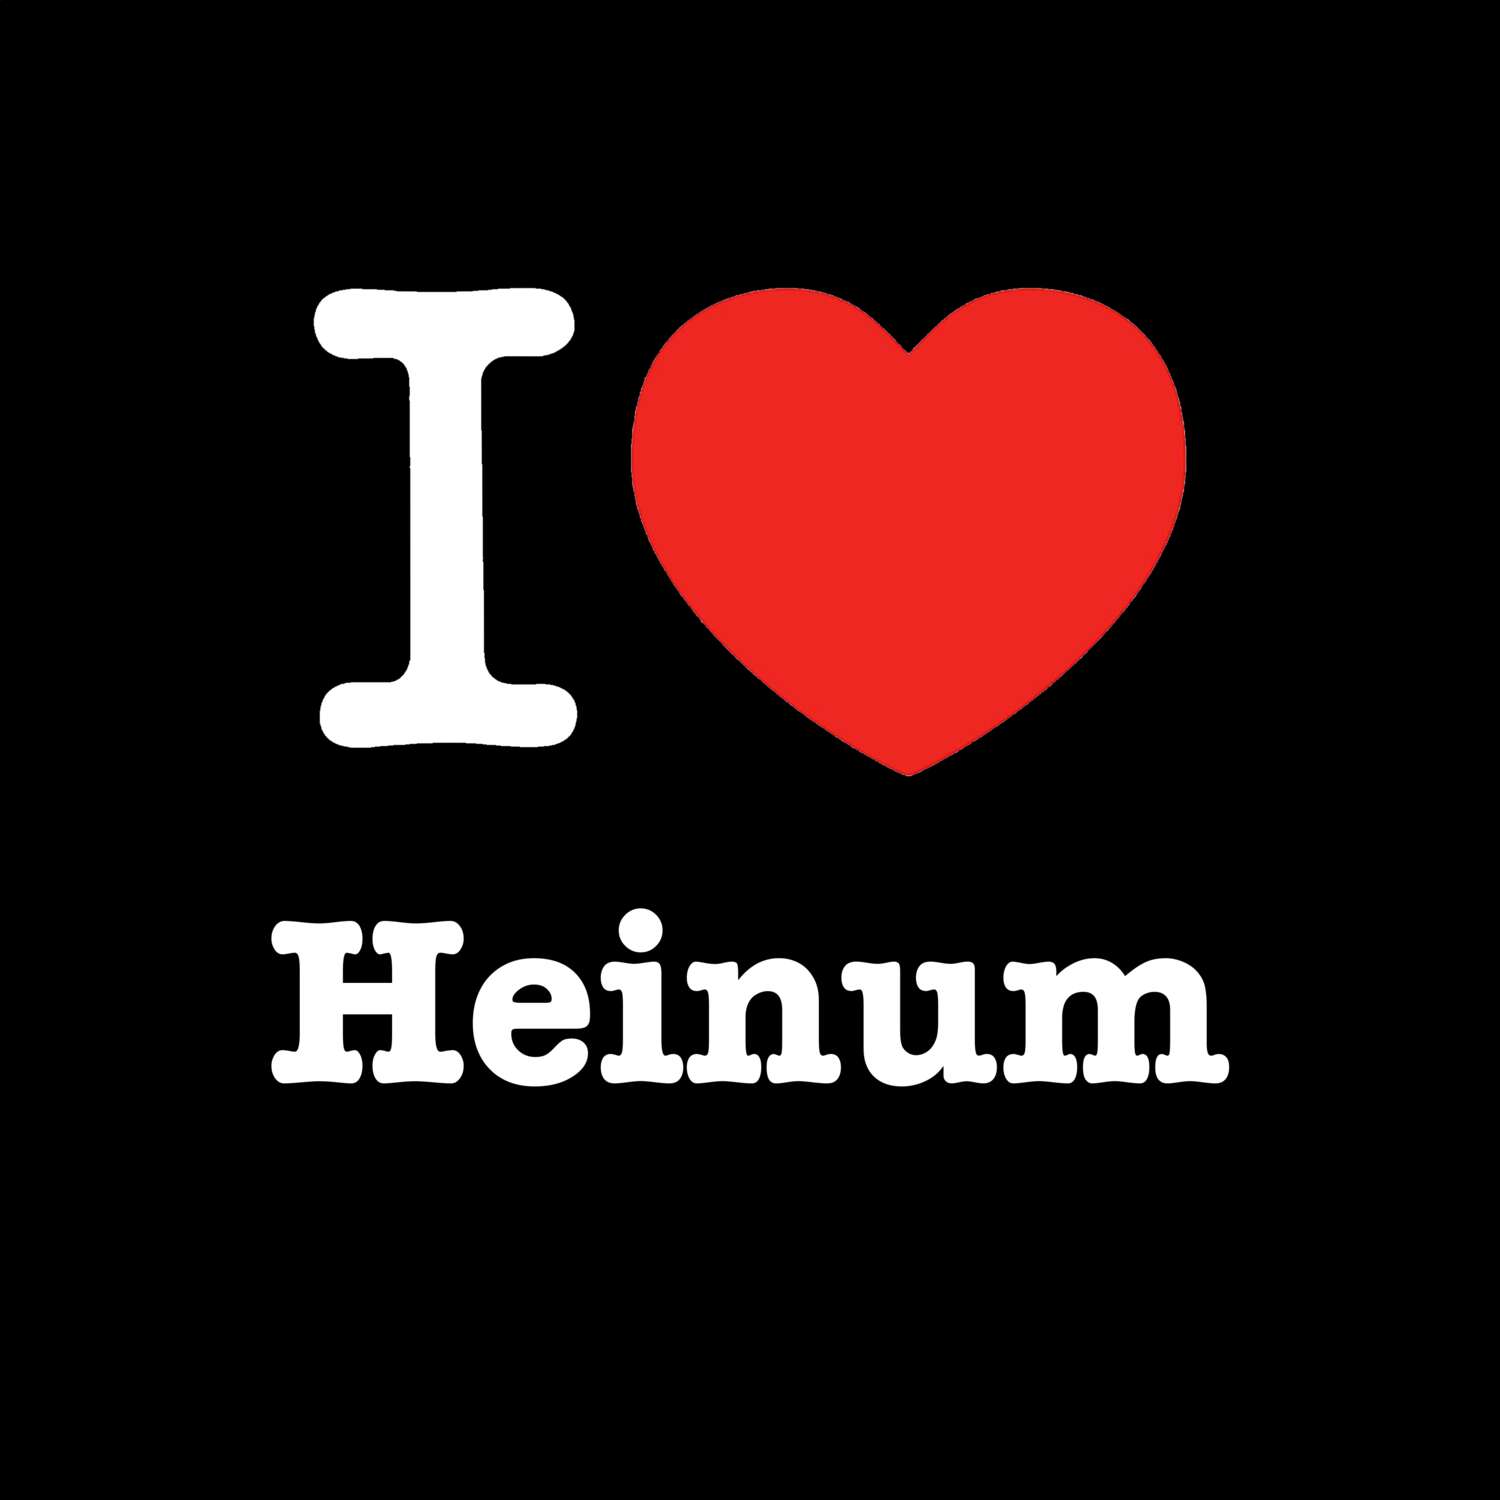 Heinum T-Shirt »I love«